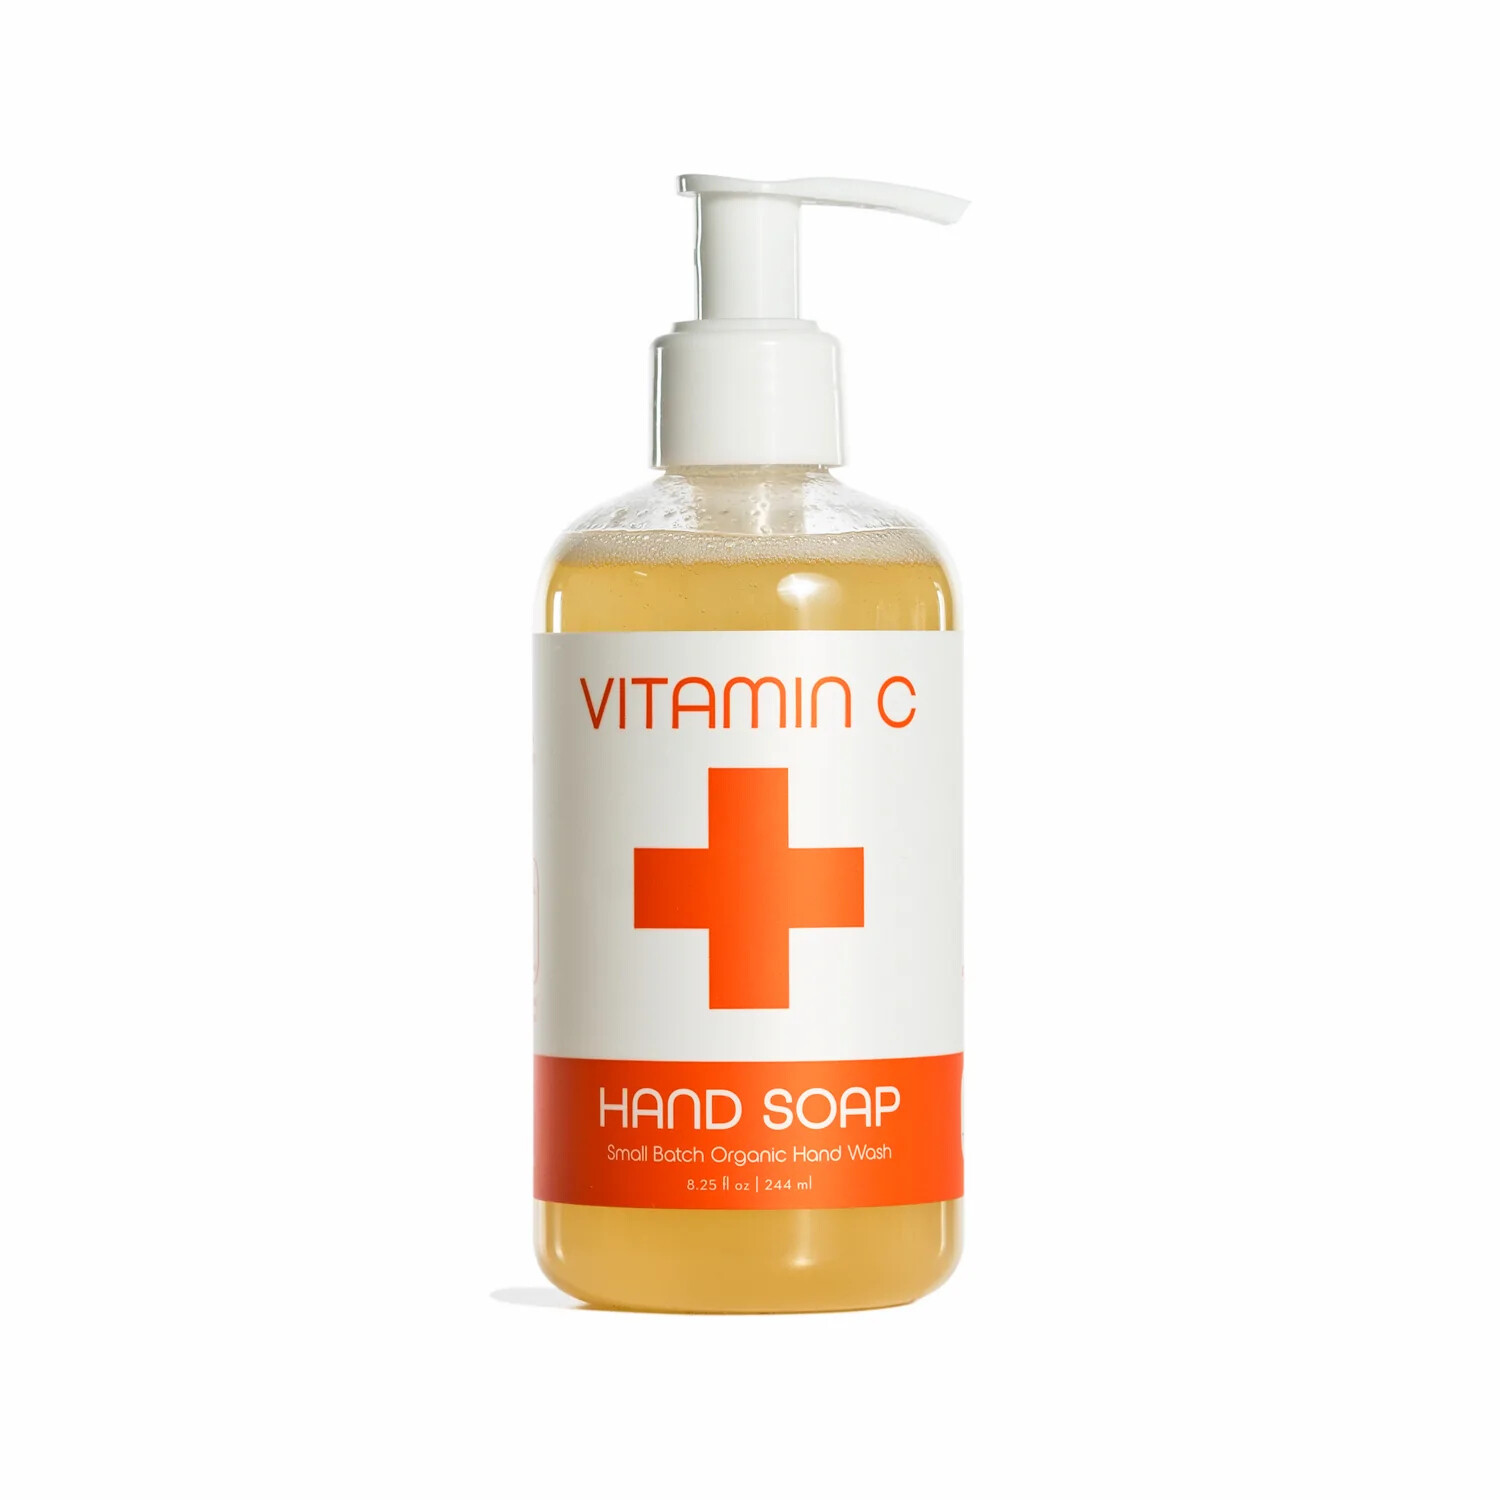 Kalastyle Nordic Wellness Vitamin C Hand Soap